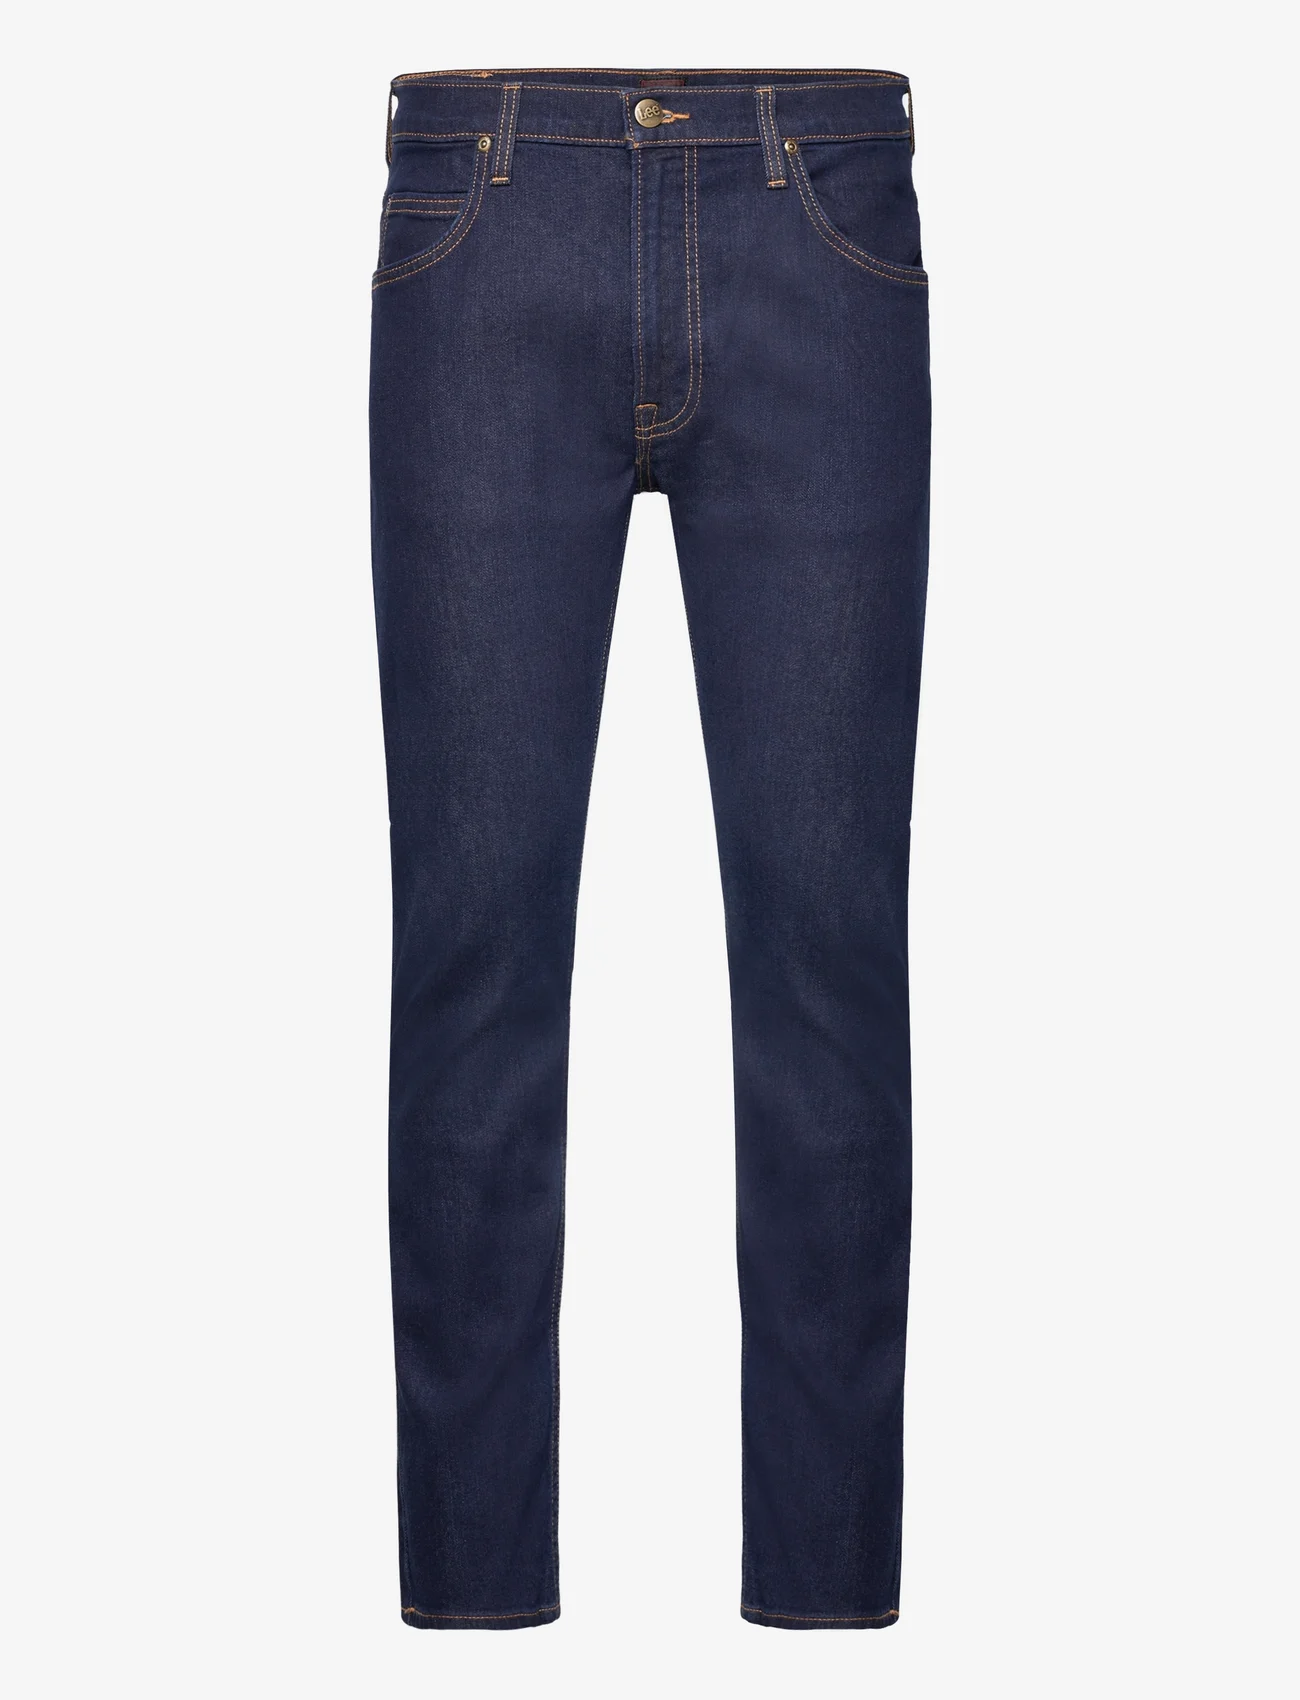 Lee Jeans - RIDER - regular jeans - rinse - 0